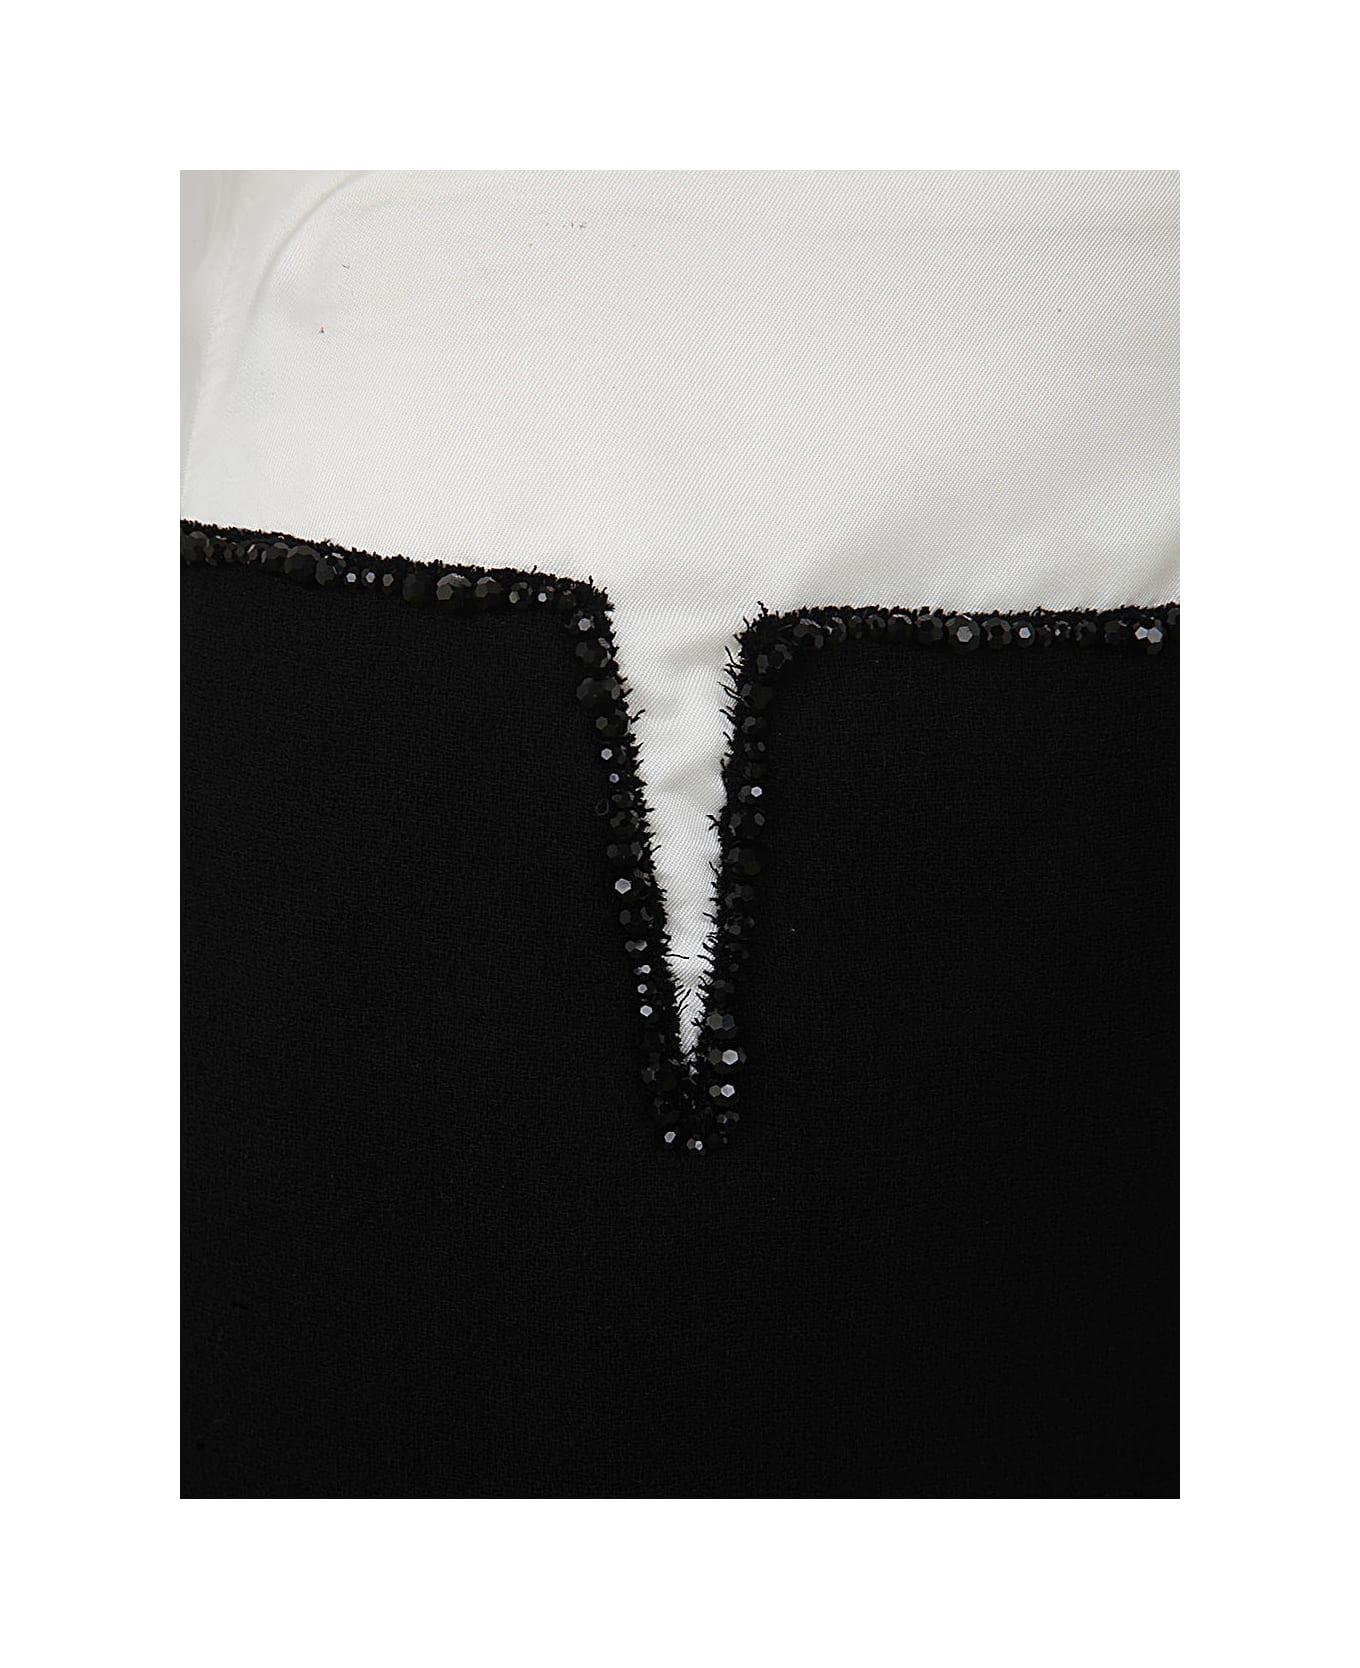 N.21 Crepe Pencil Skirt - Black